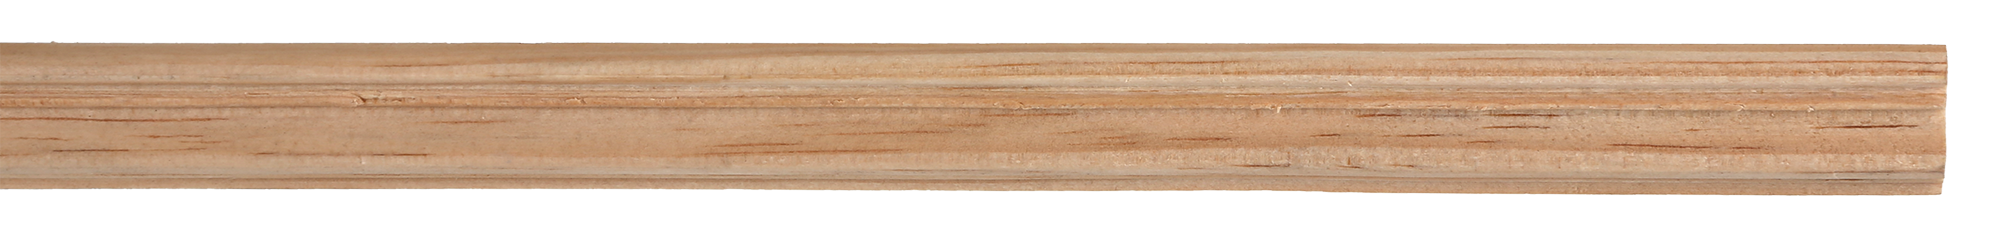 Jamba clasica maciza de pino 18x9 mm x 2,40 m (ancho x grueso x largo)